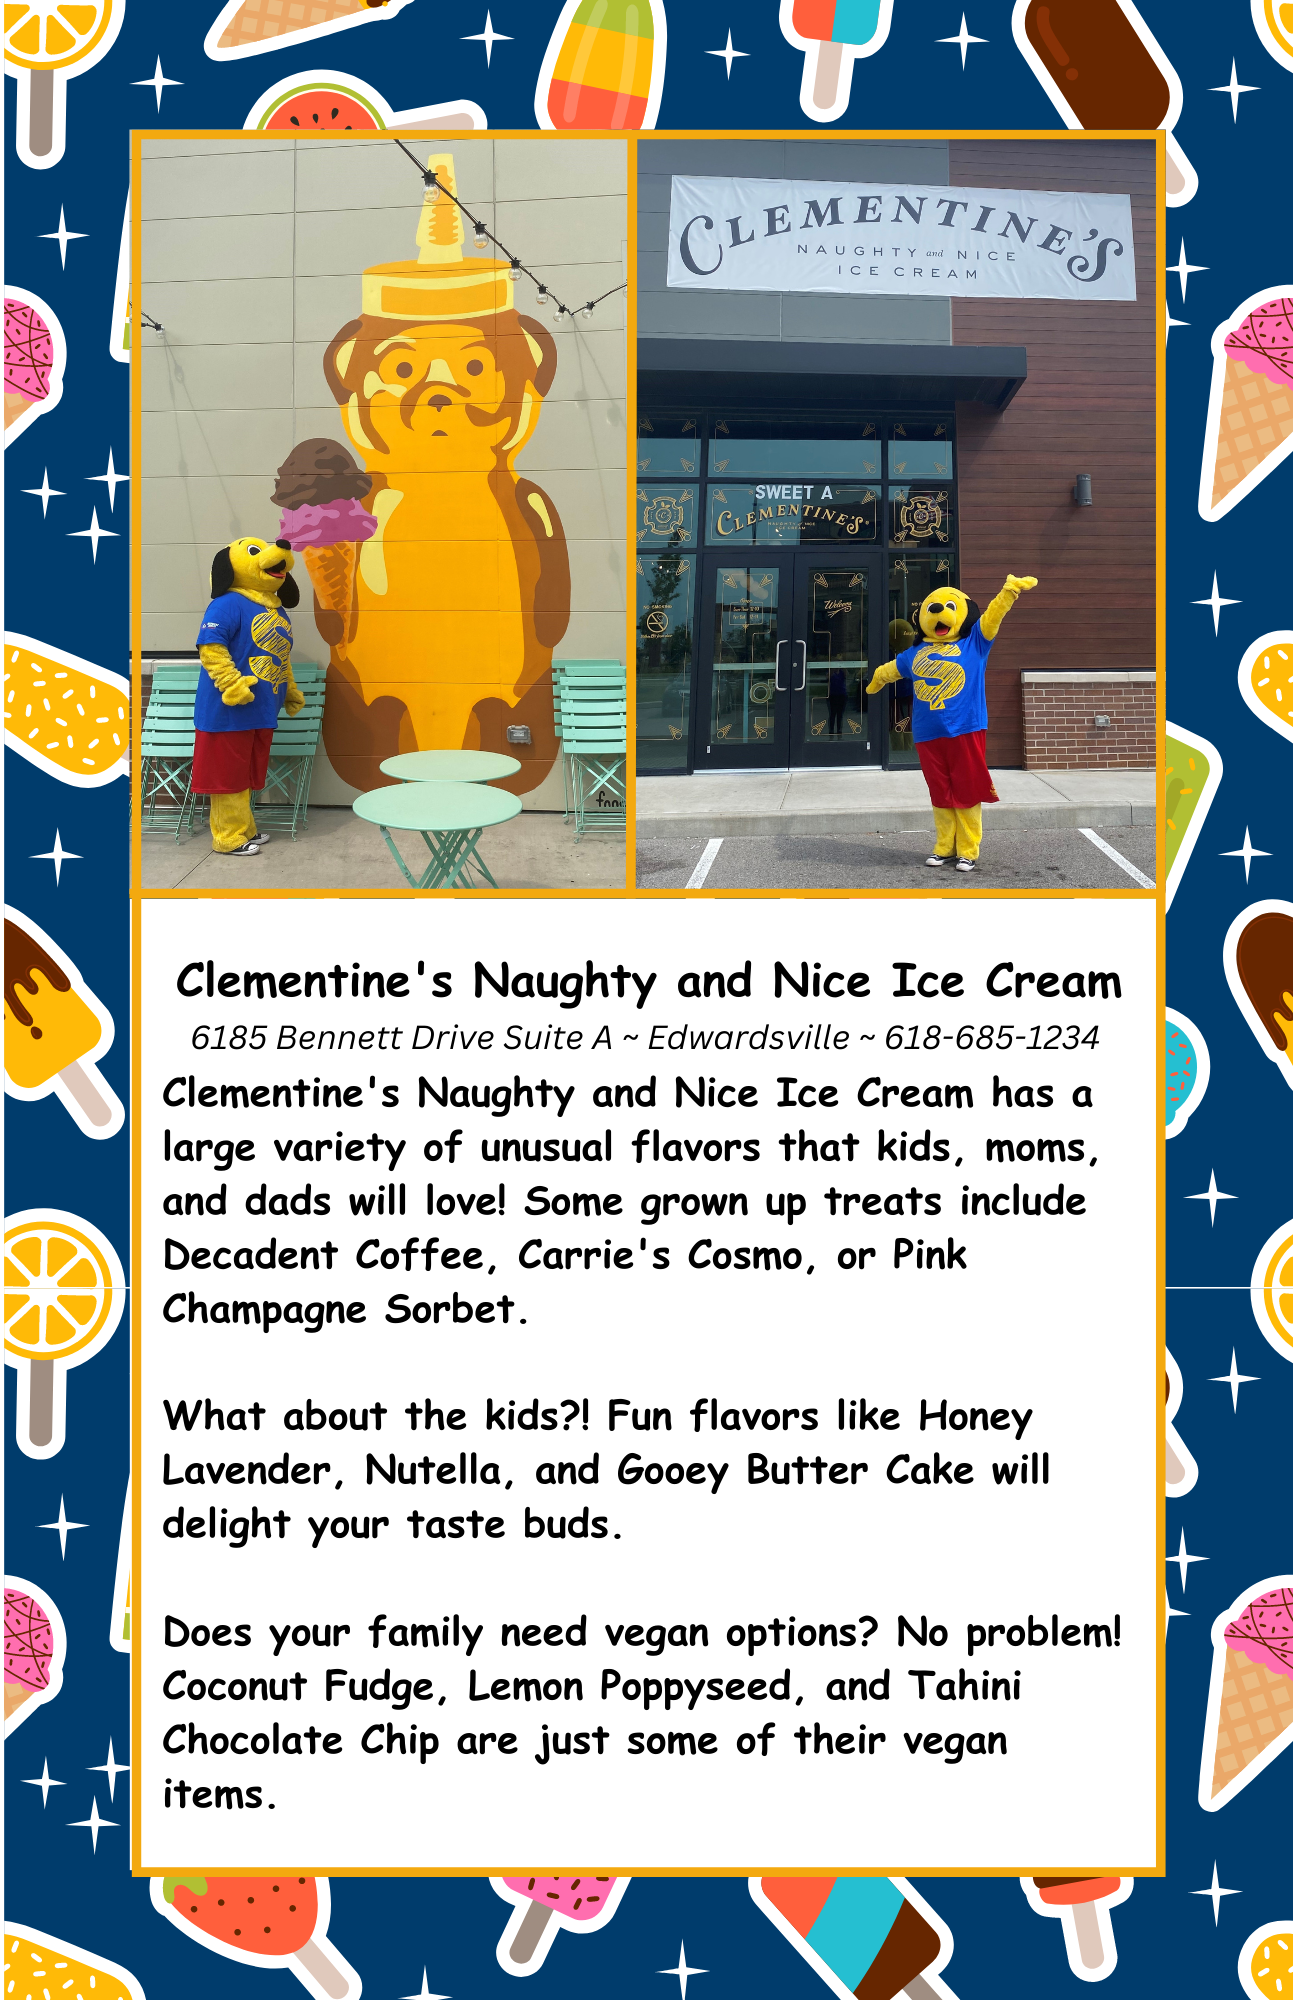 Money Dog at Clementine's Naughty and Nice Ice Cream